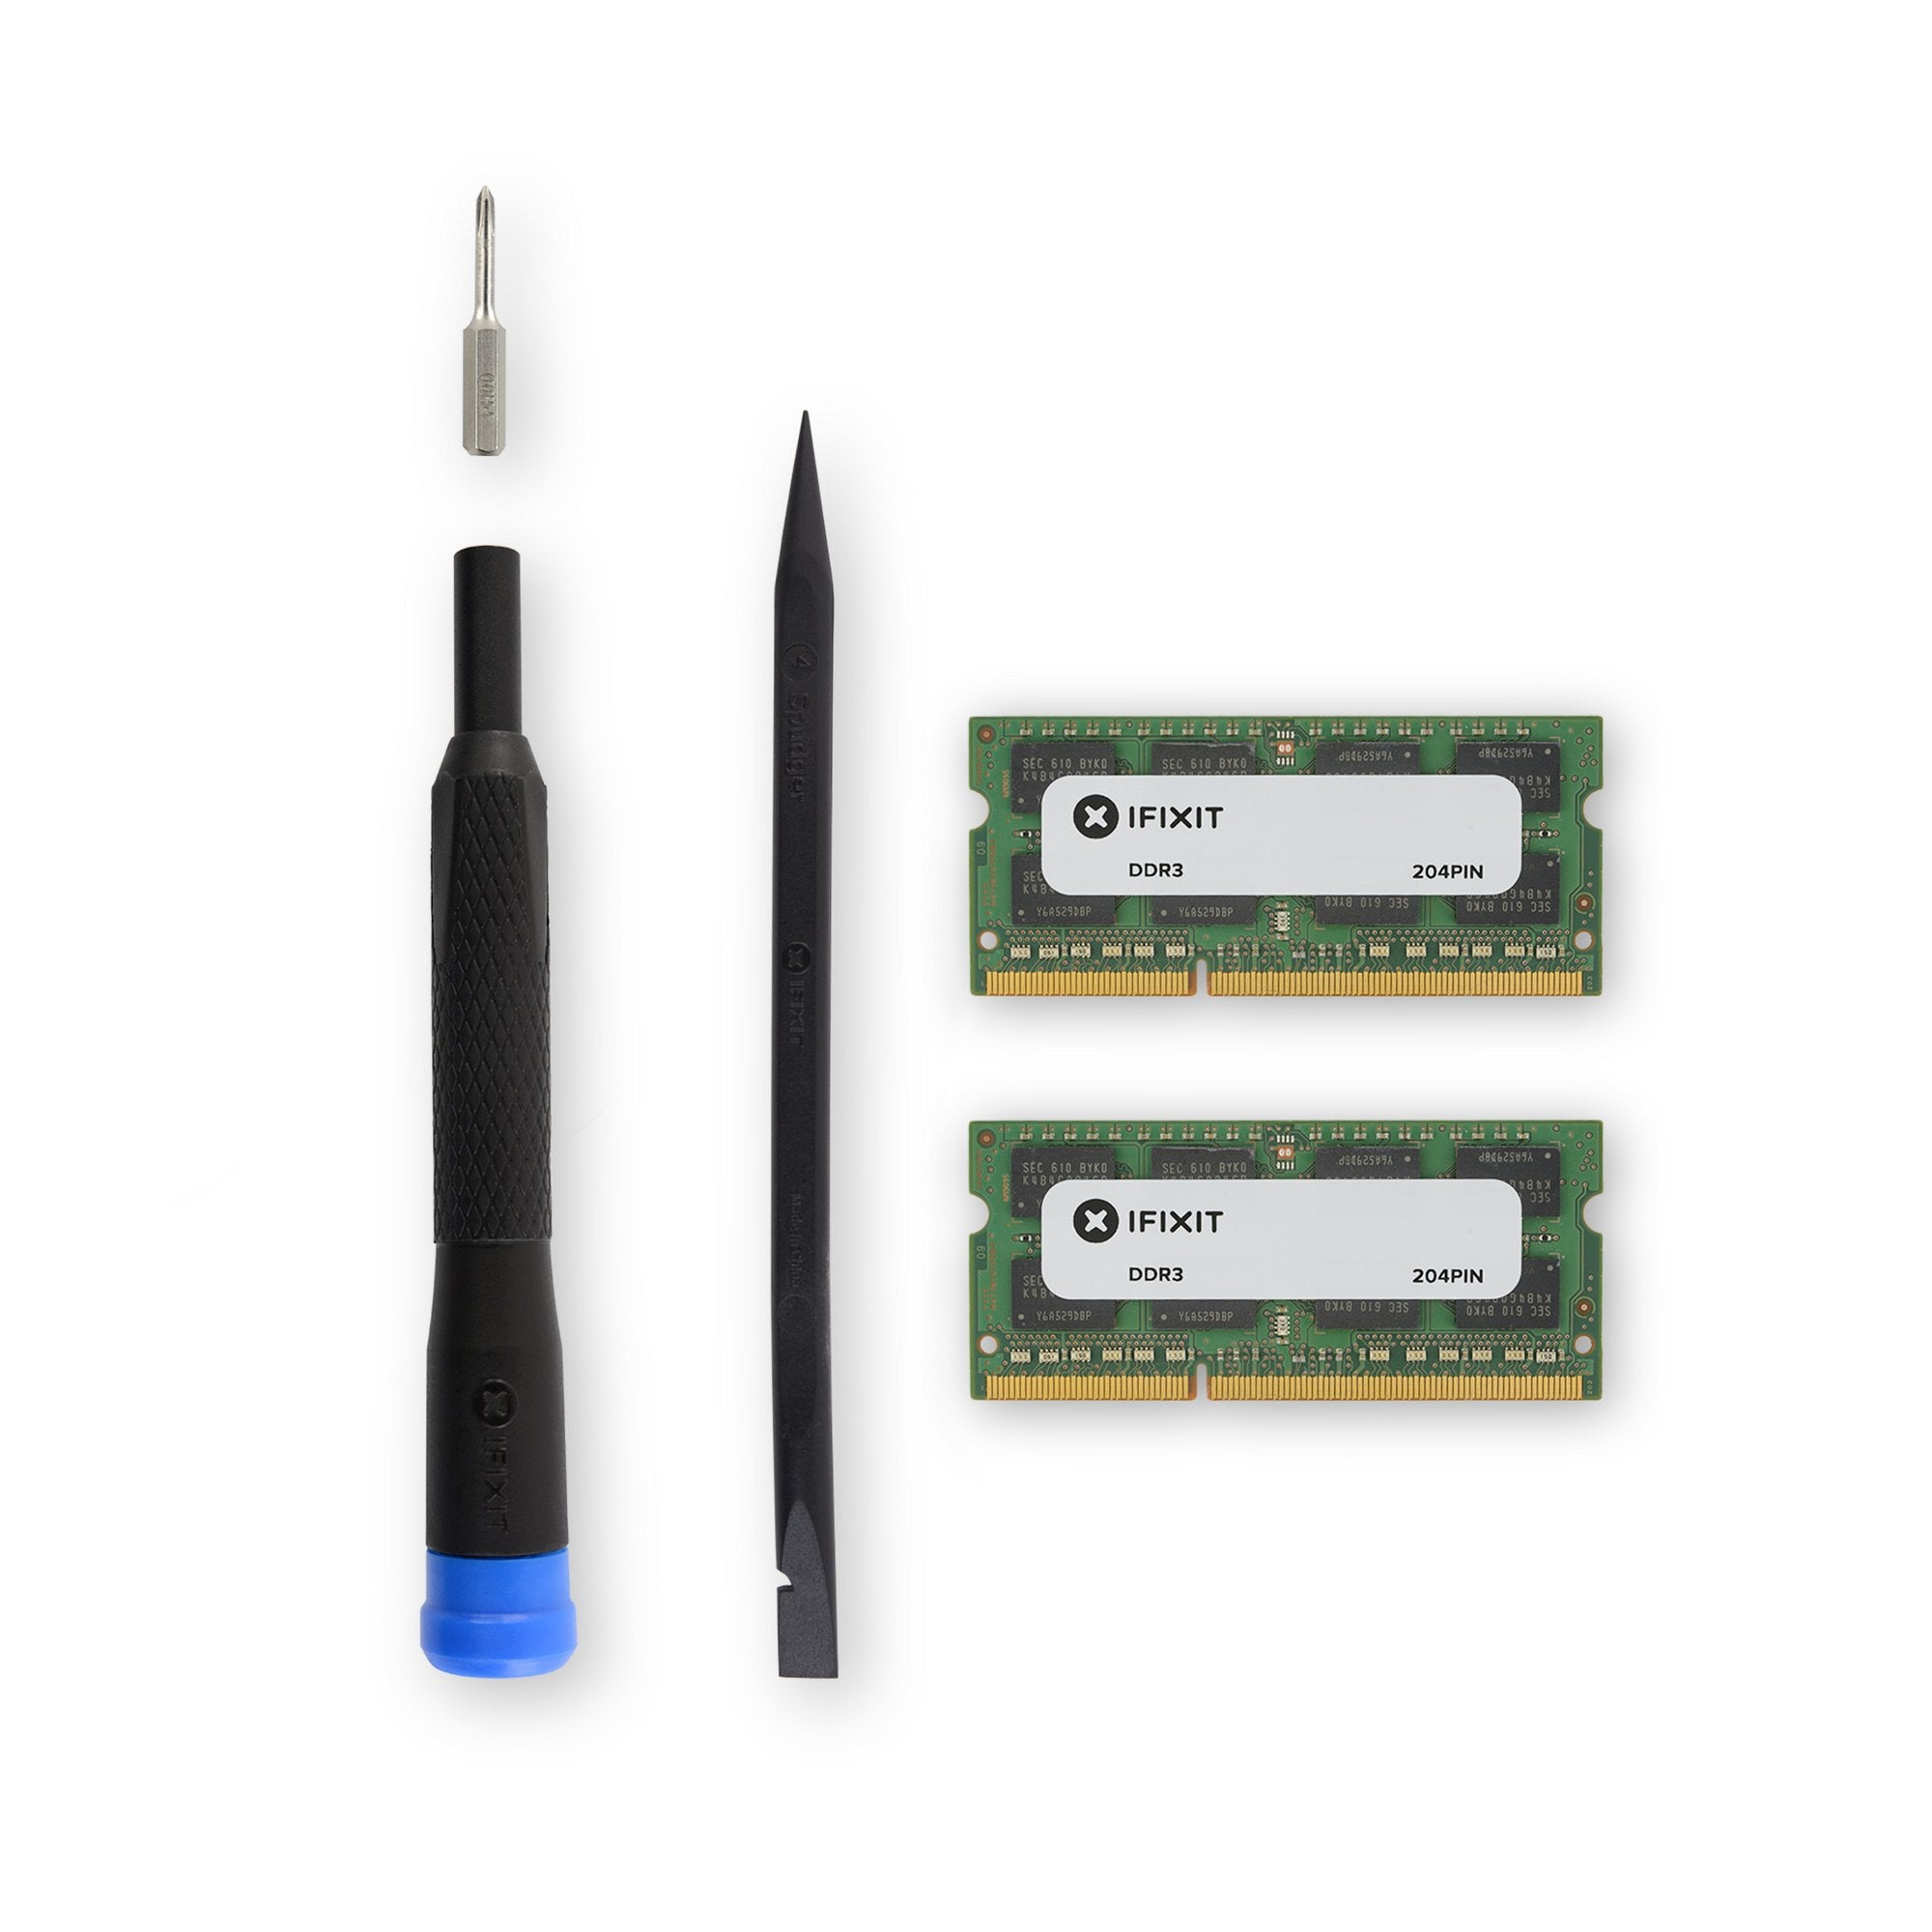 MacBook Pro 13" Unibody (Mid 2010) Memory Maxxer RAM Upgrade Kit New